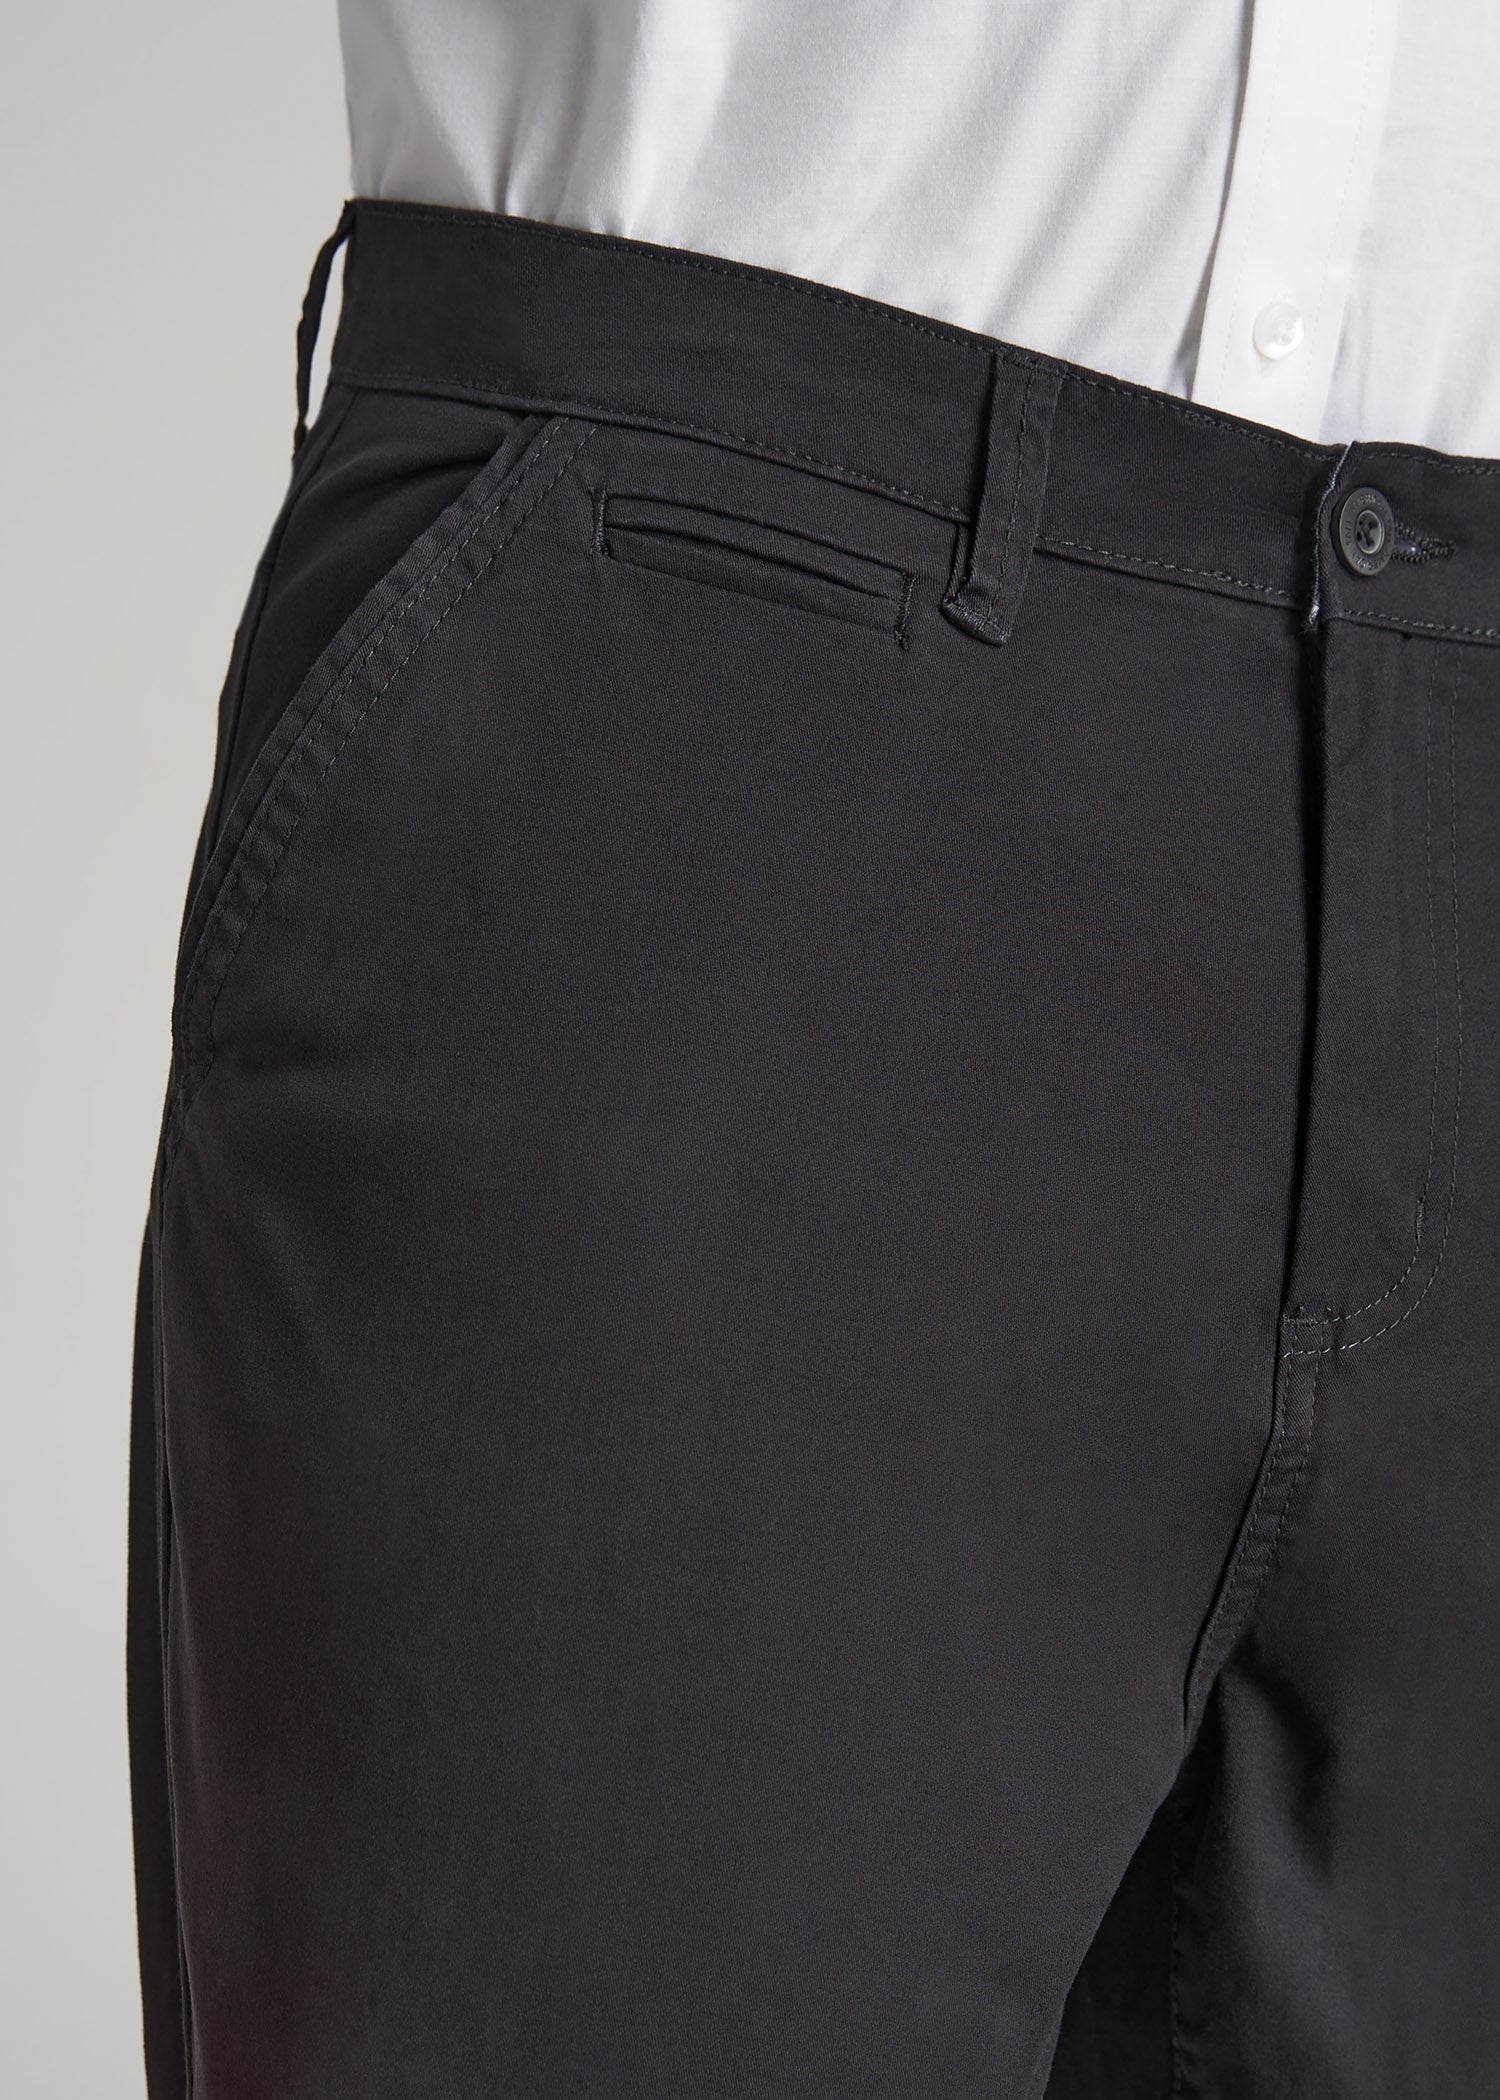 Men's Tall Mason Semi-Relaxed Fit Chino Pants Black